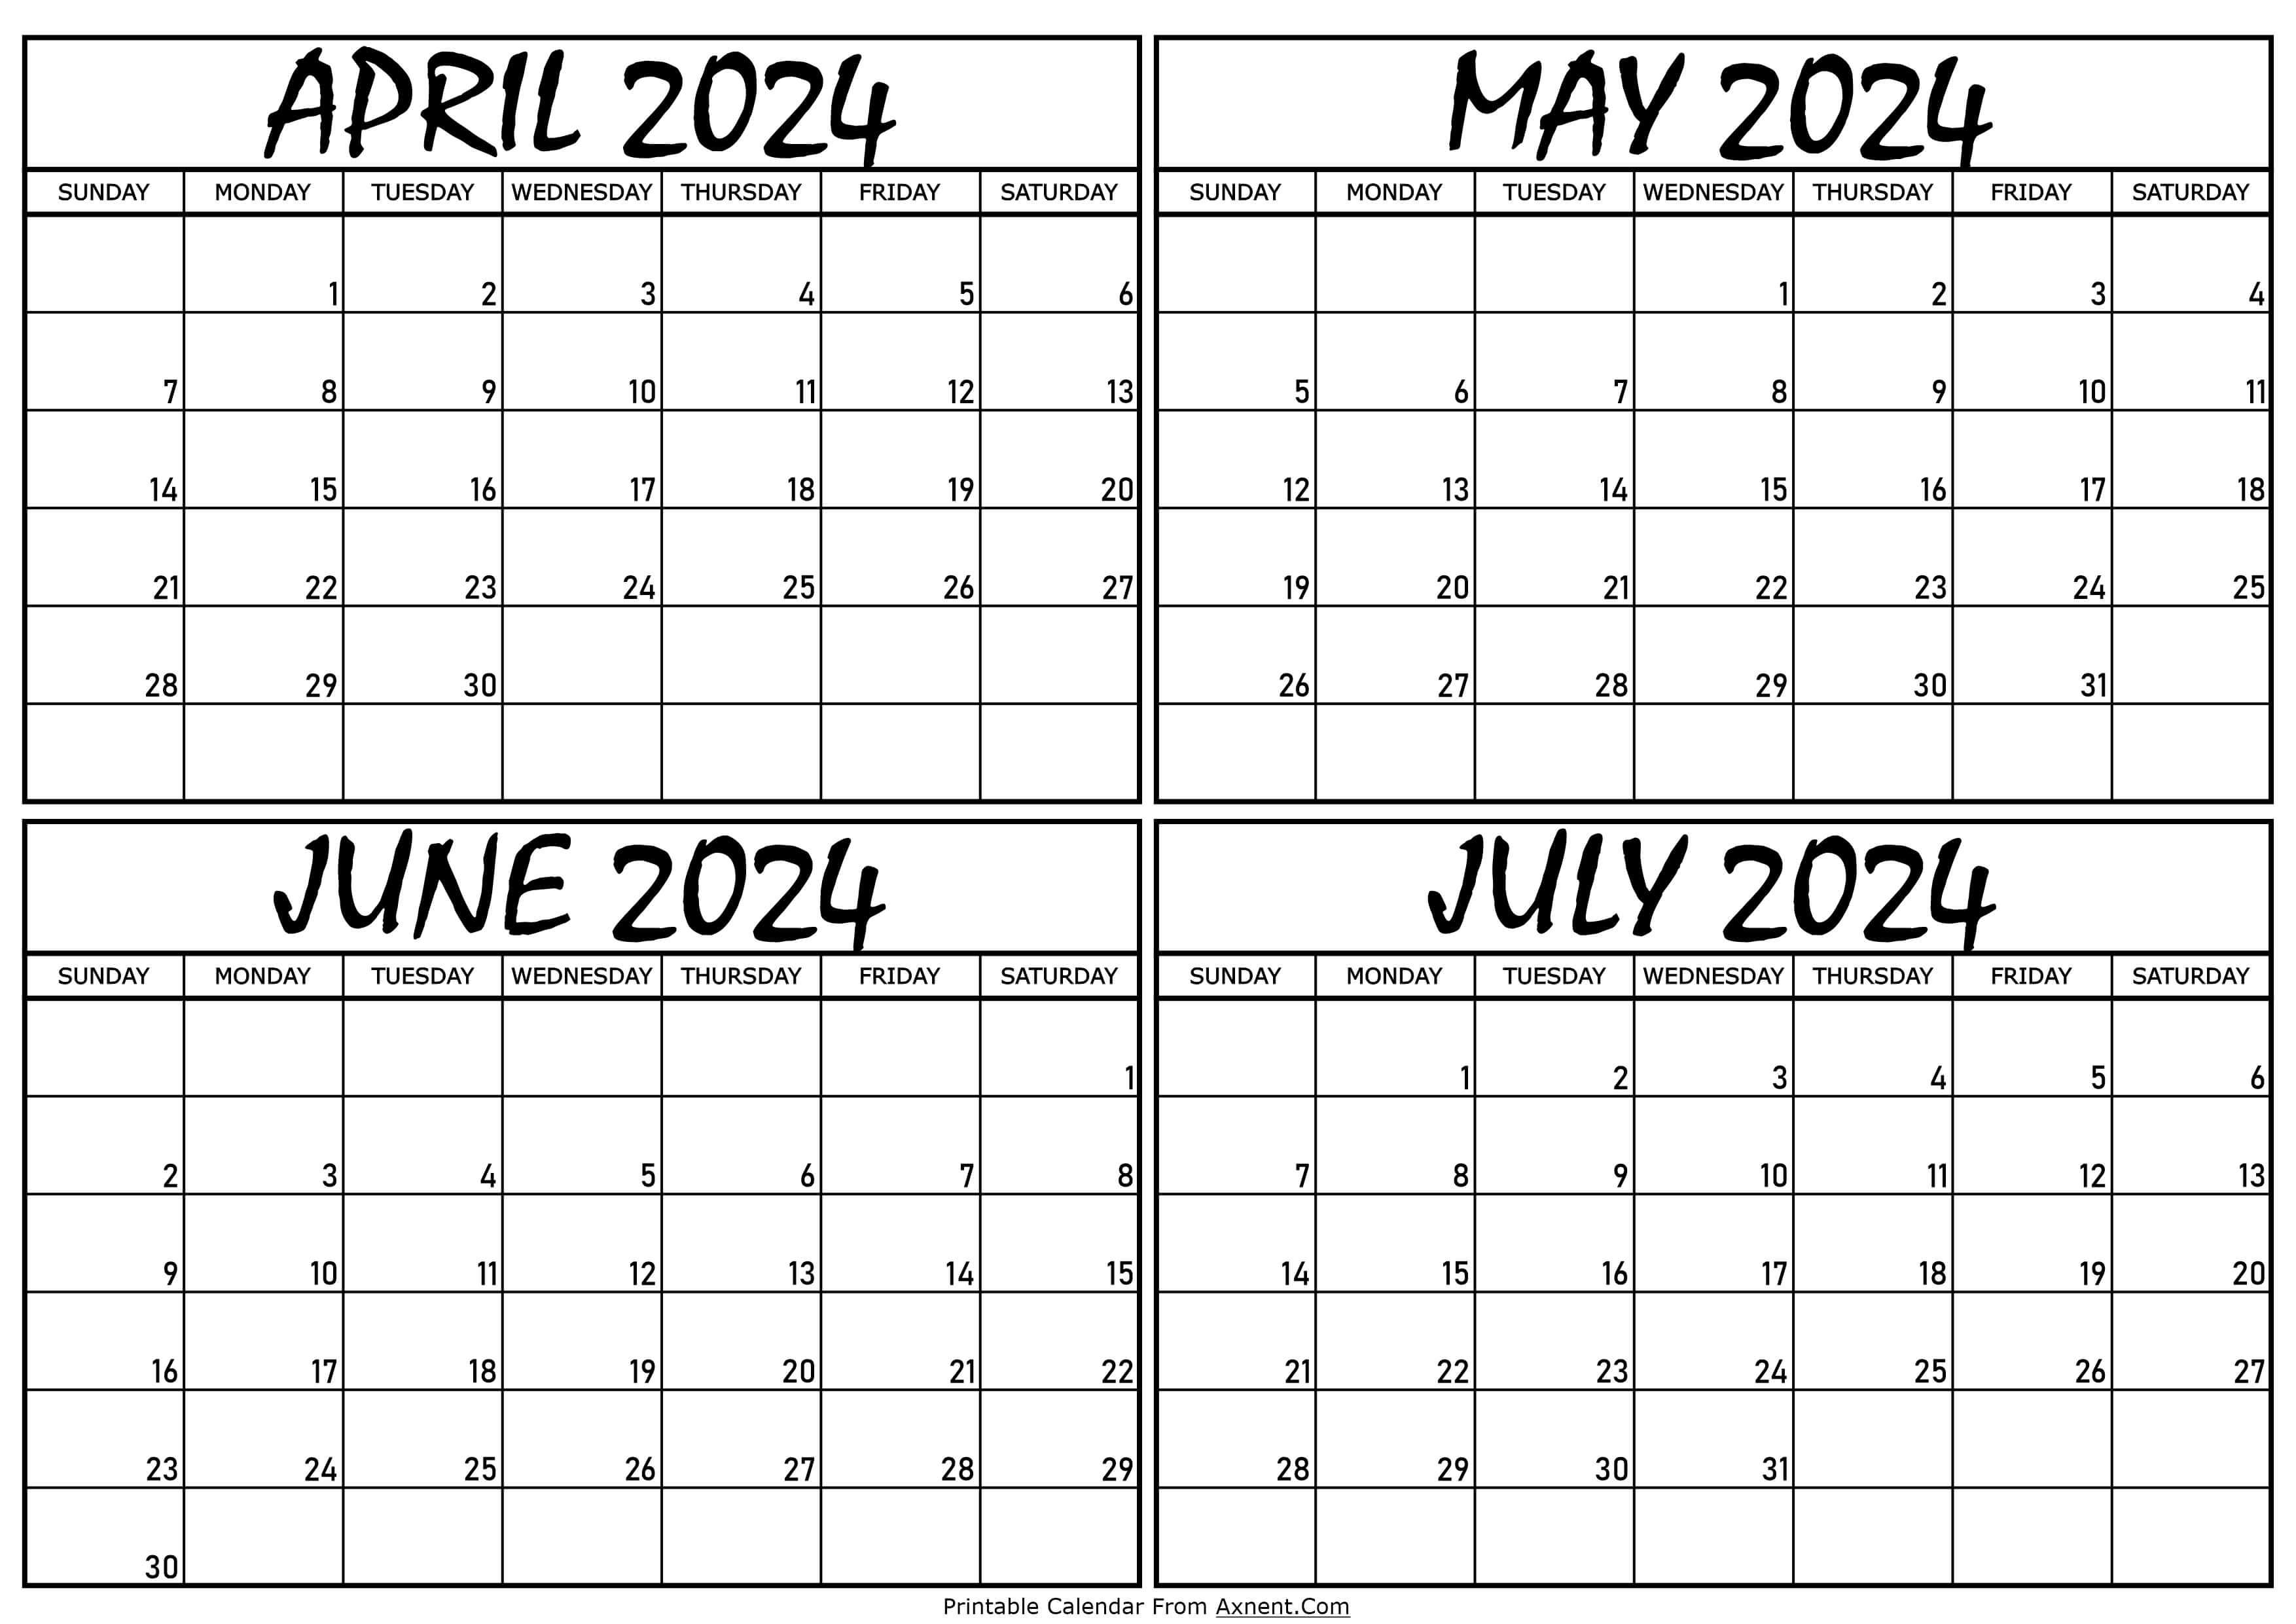 Calendar April to July 2024